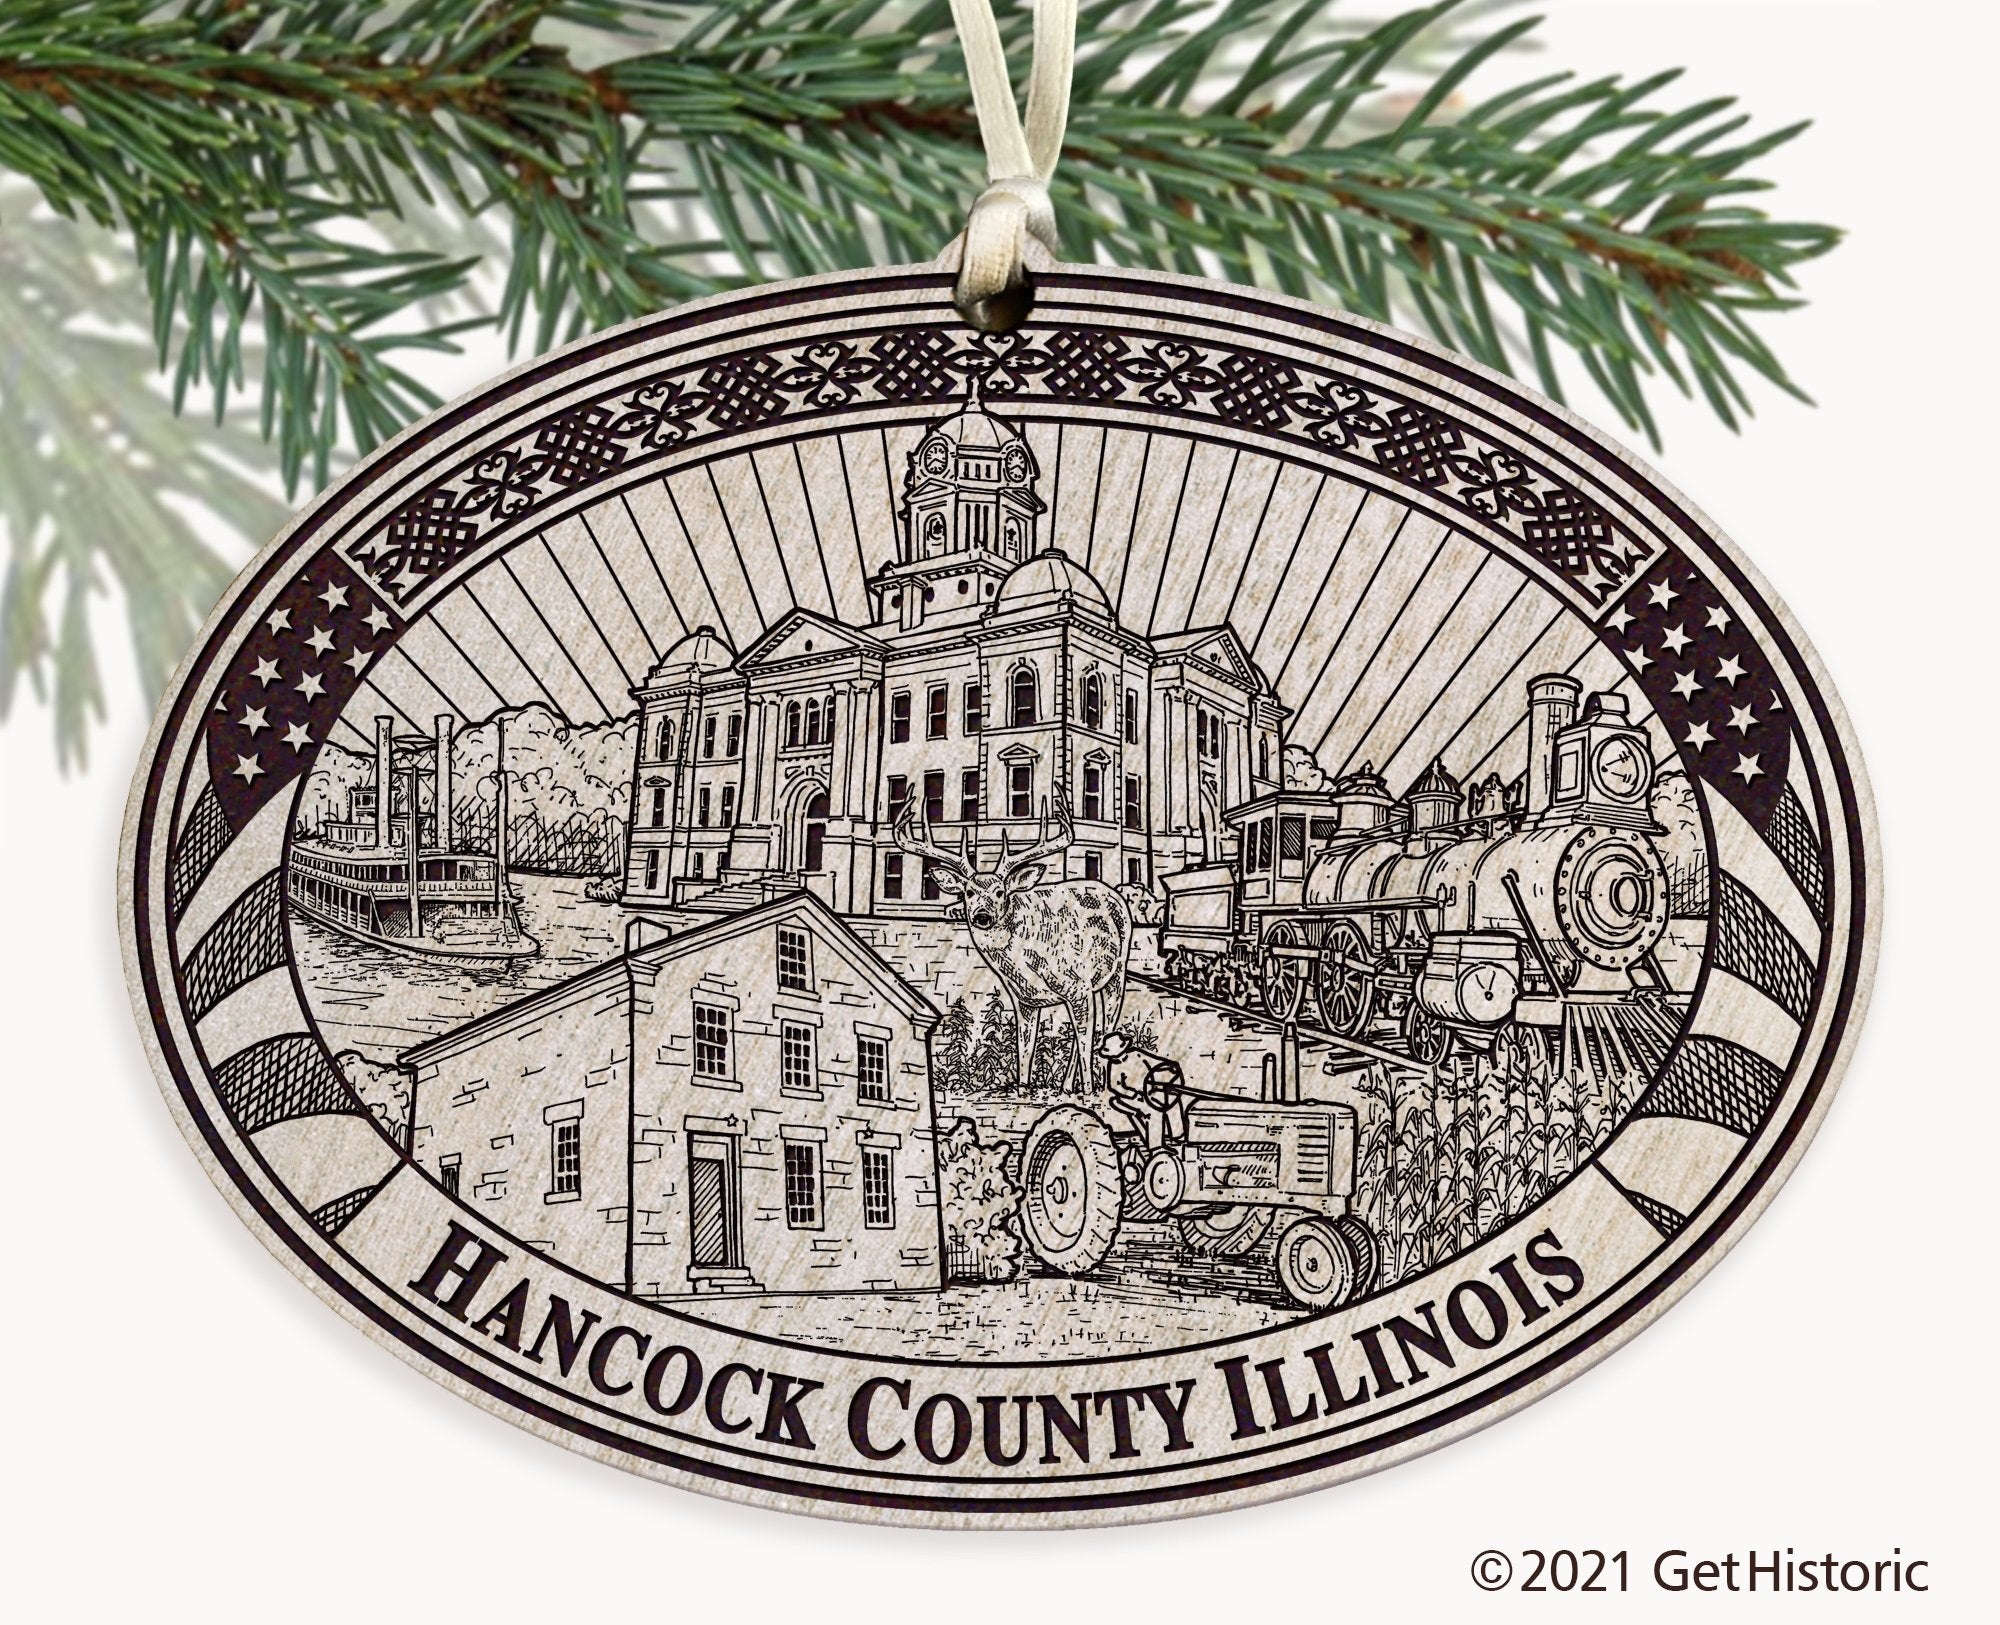 Hancock County Illinois Engraved Ornament